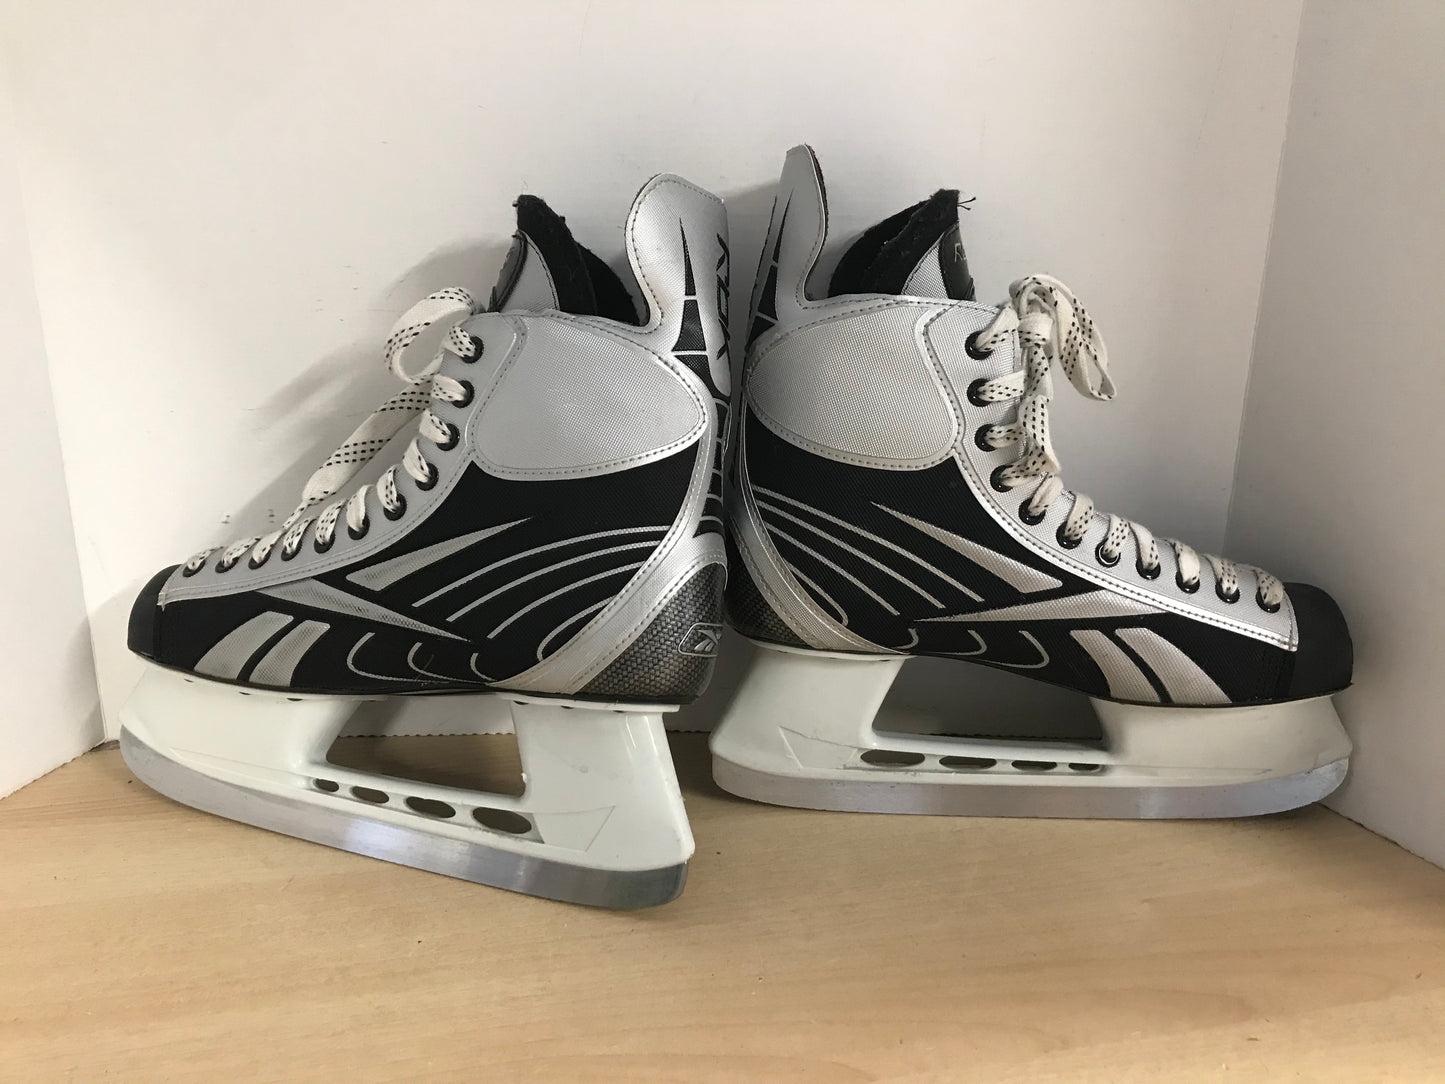 Hockey Skates Men's Size 11.5 Shoe Size Reebok XT New Demo Model